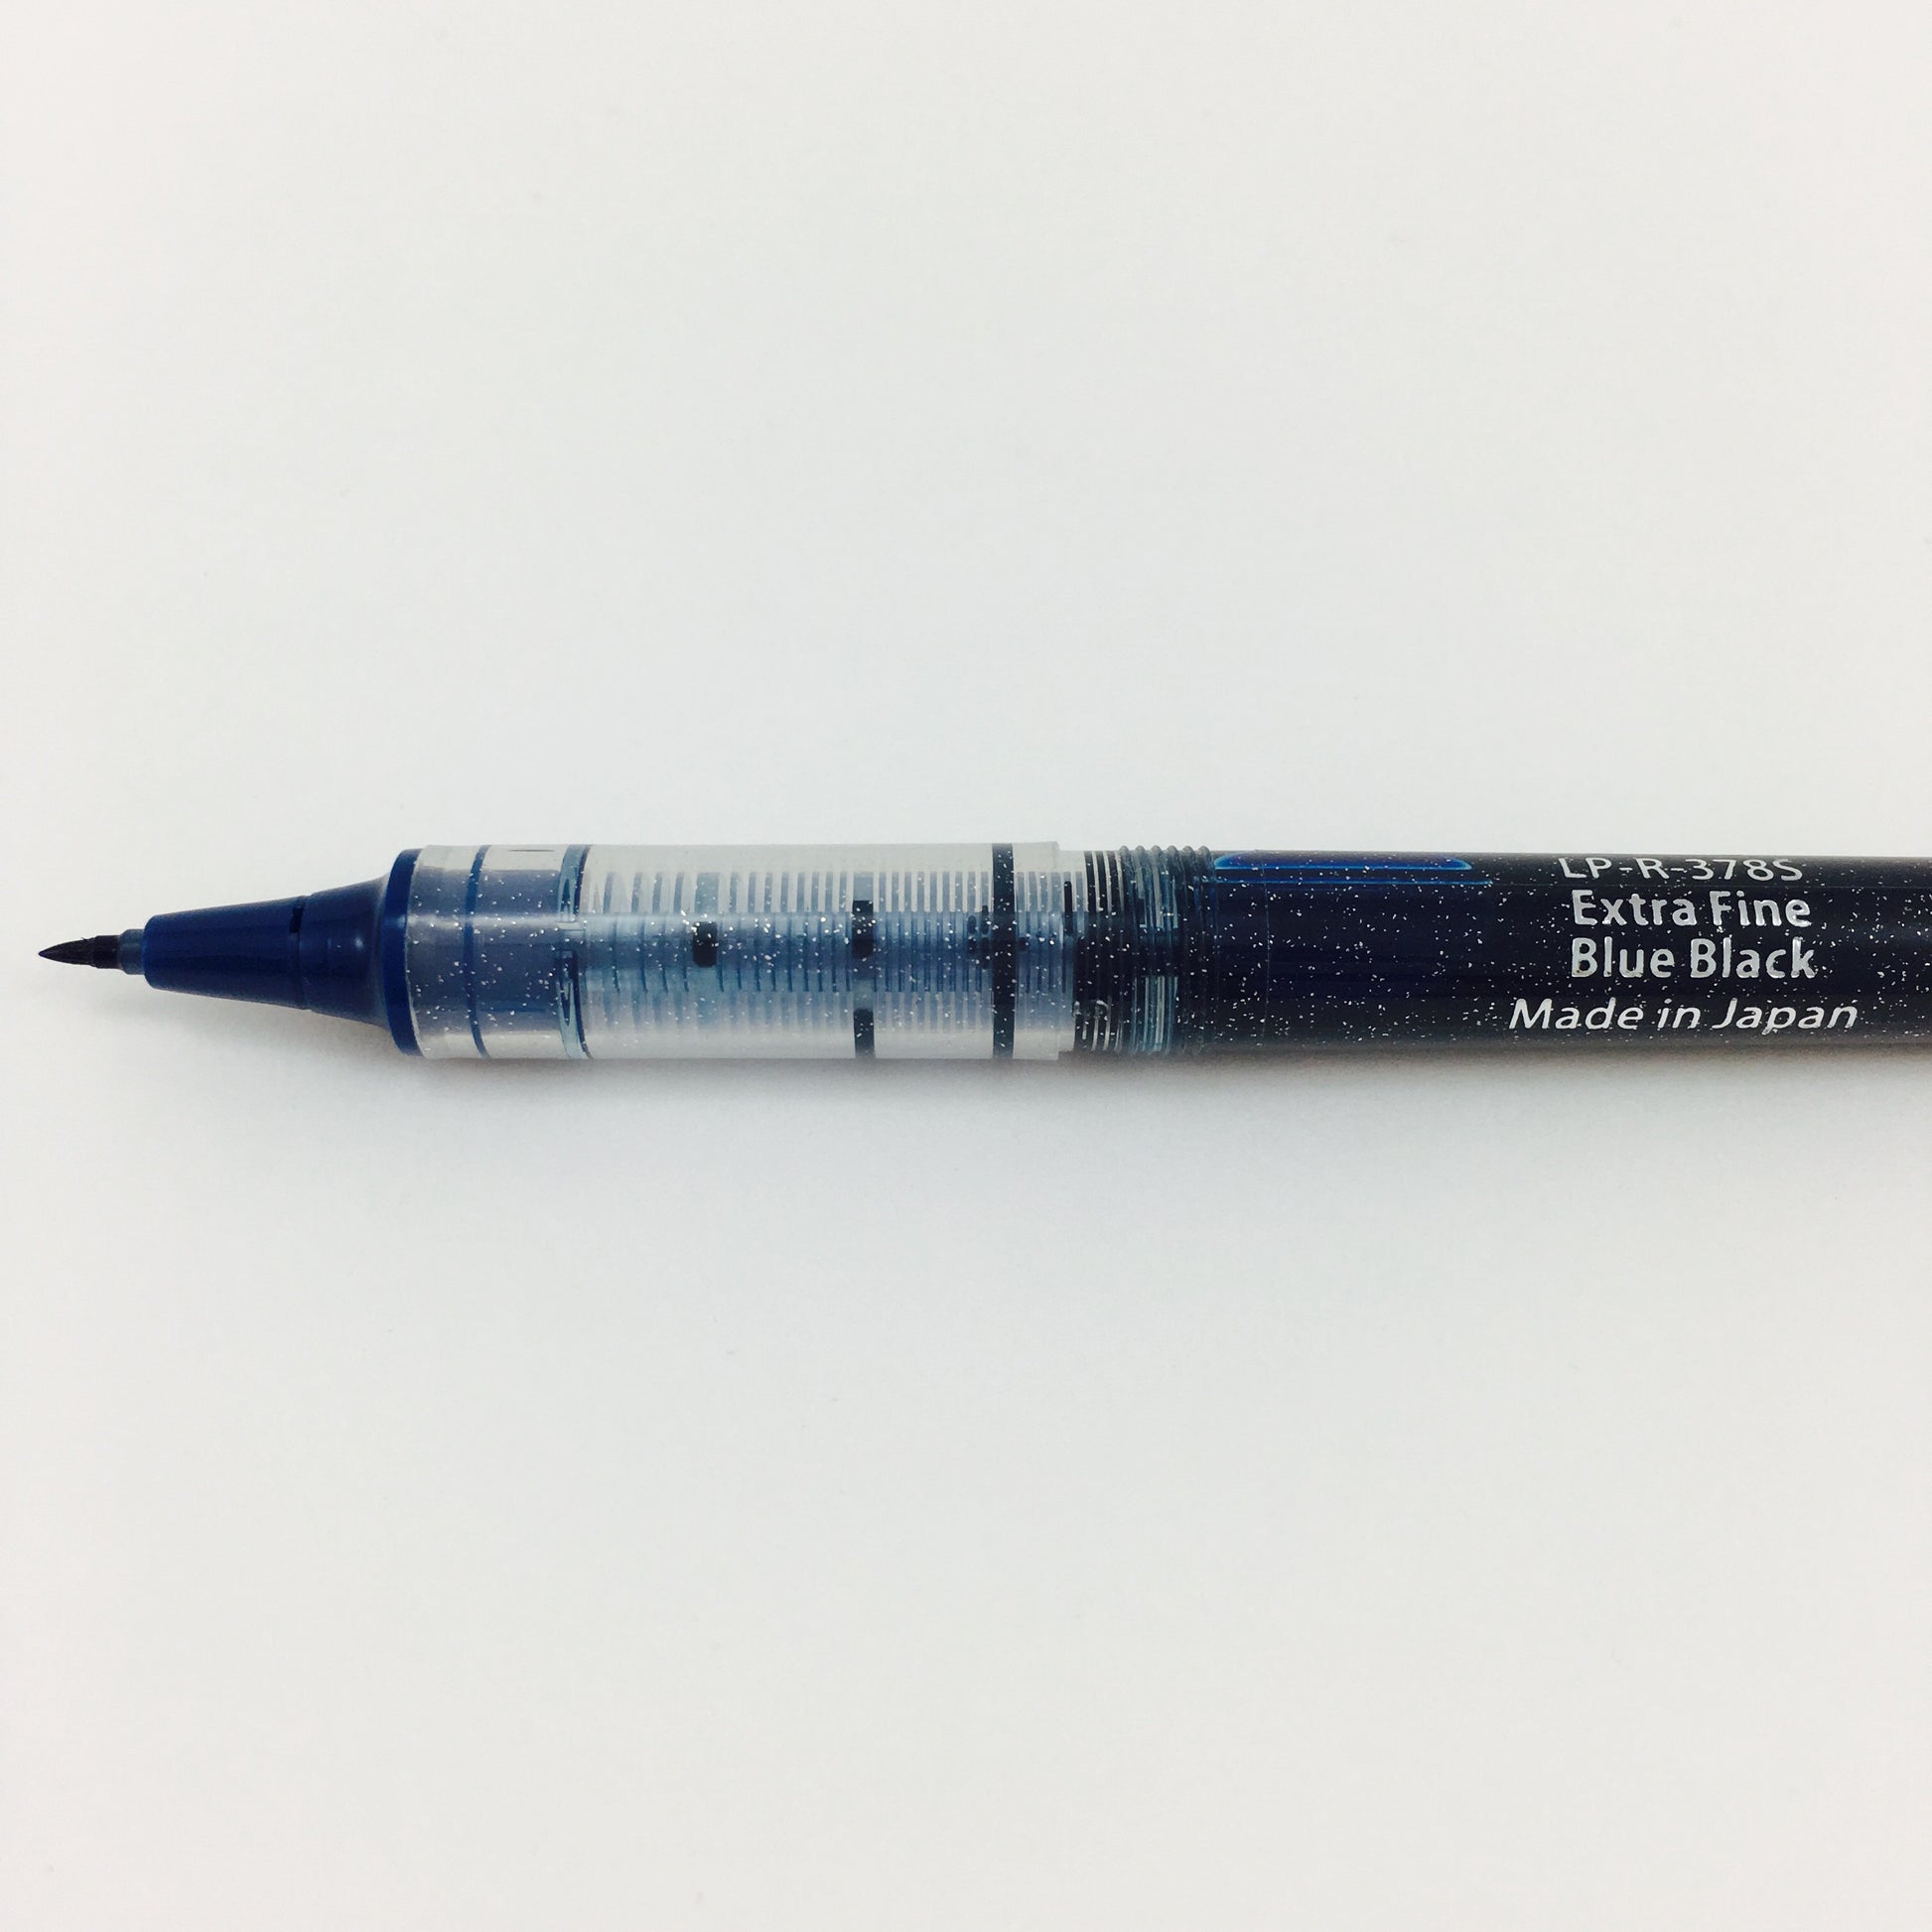 Zig by Kuretake "Cocoiro" Pen Cartridges Refills - Blue Black / Extra Fine by Kuretake - K. A. Artist Shop